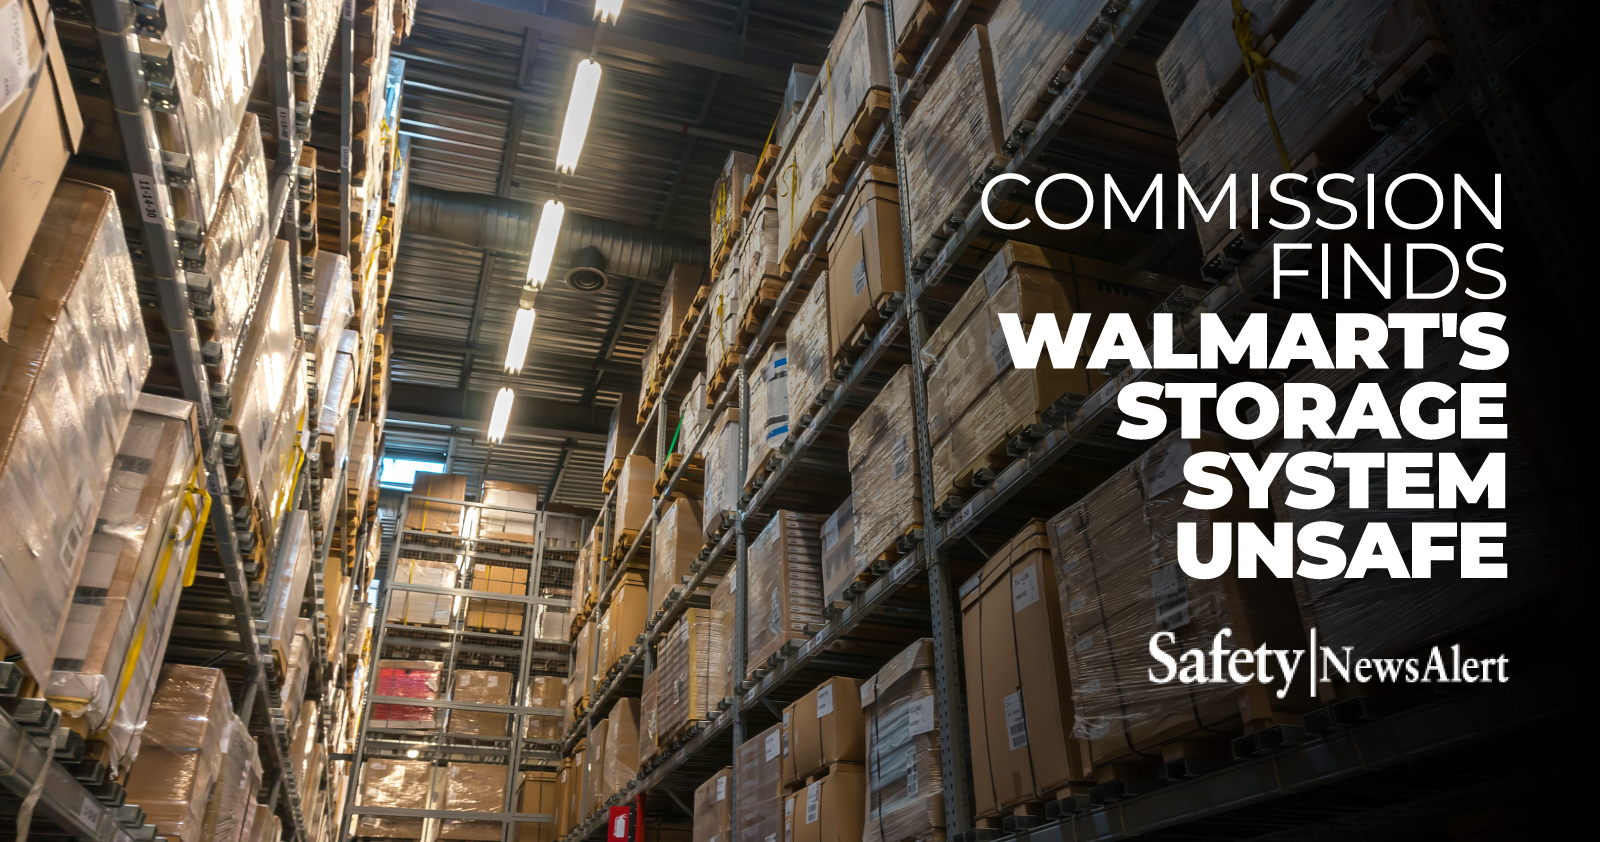 Commission finds Walmart's storage system unsafe